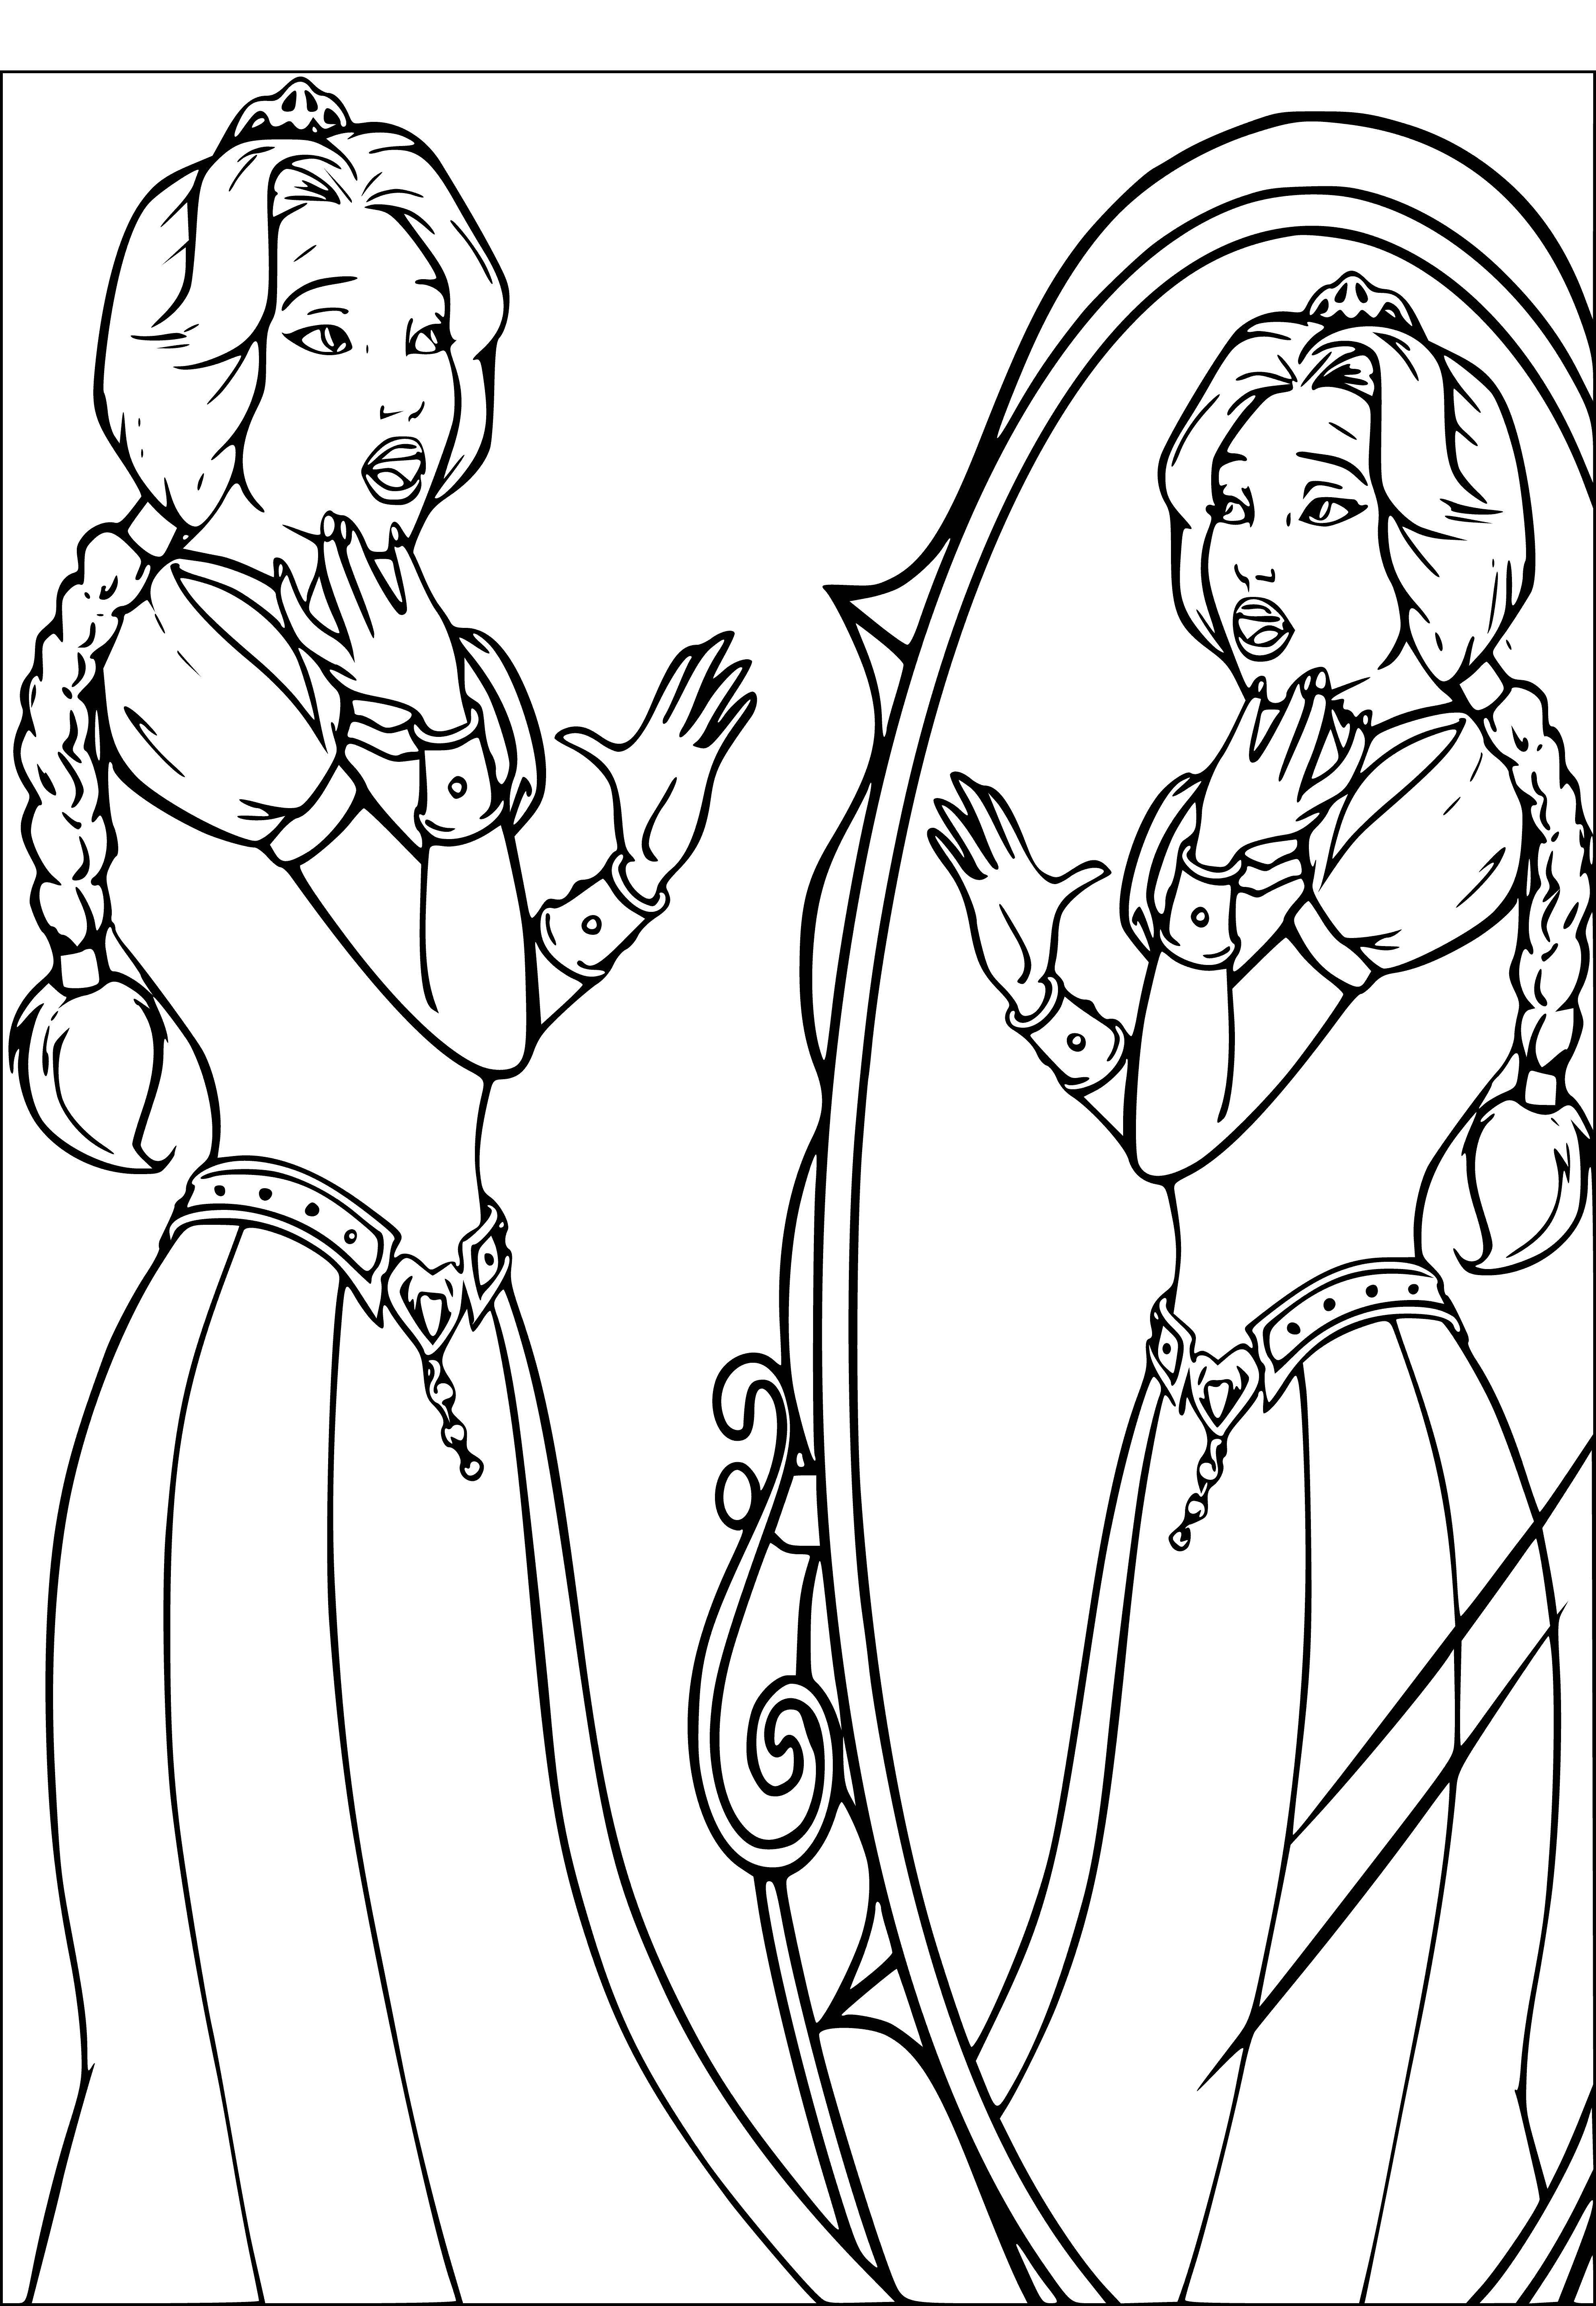 Princess fiona coloring page